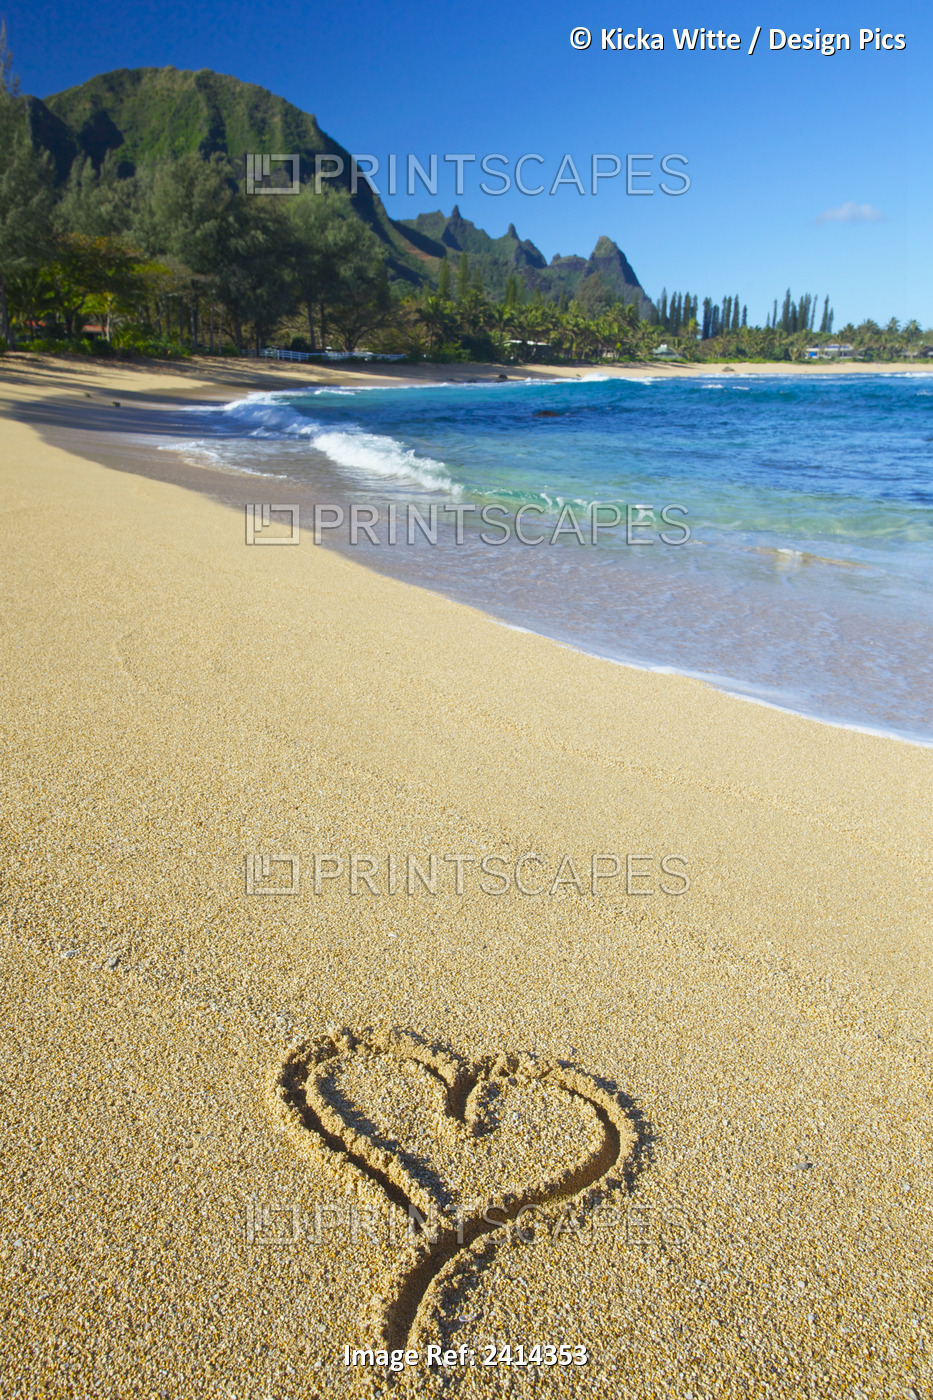 A Heart Shape Drawn In The Sand On Tunnels Beach; Kauai, Hawaii, United States ...